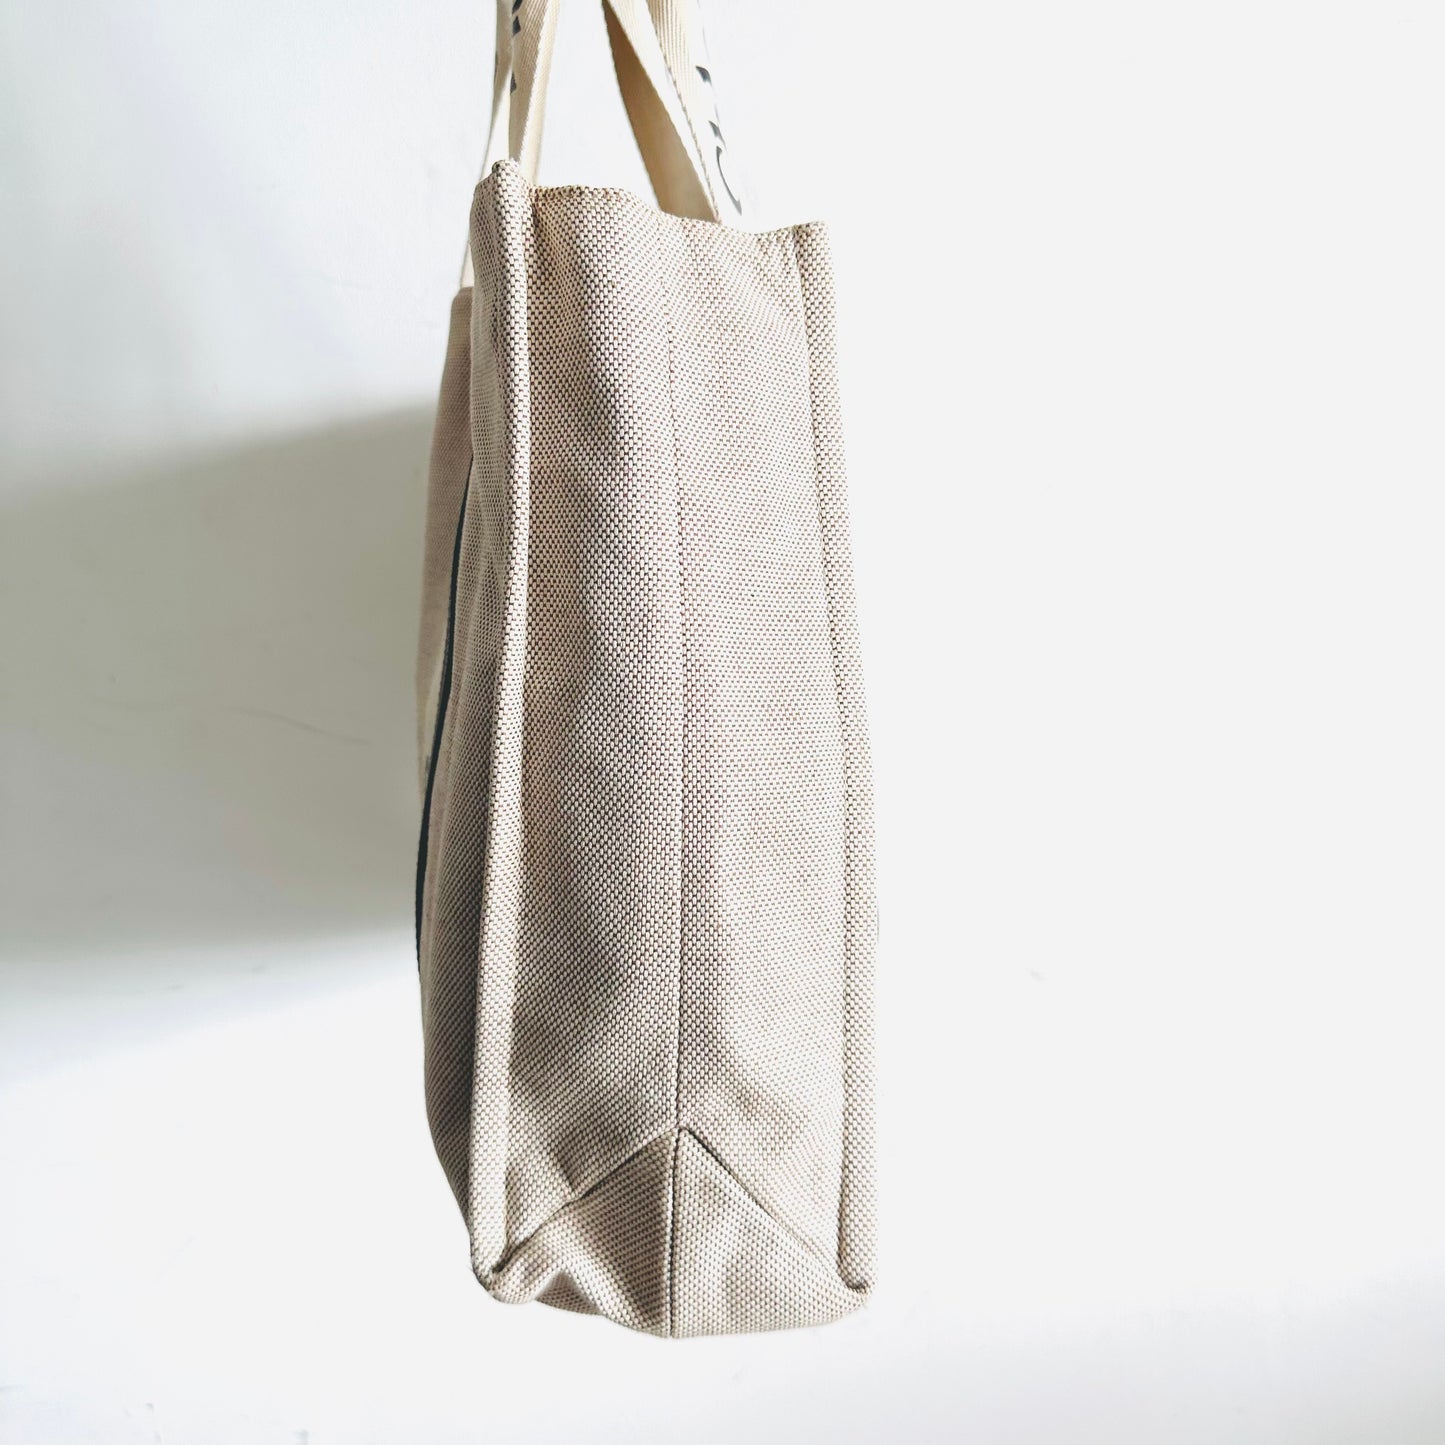 Chloe Woody Beige / Black Monogram Logo Shopper Large Shoulder Tote Bag